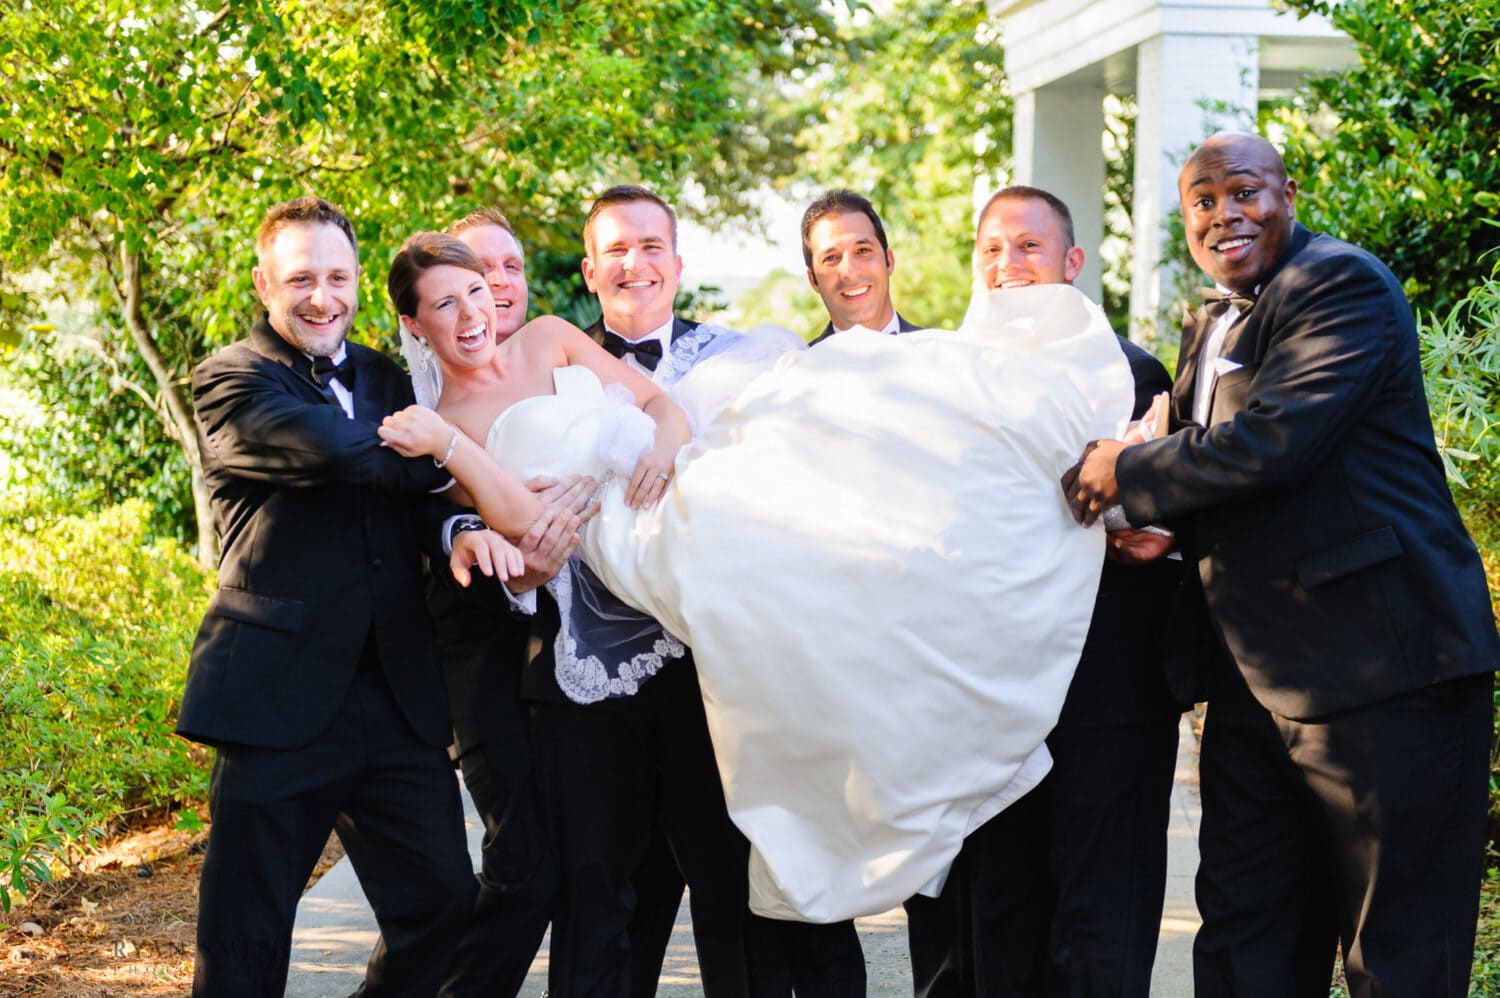 Groomsmen trying to pick up the bride - Daniel Island Club - Charleston, SC